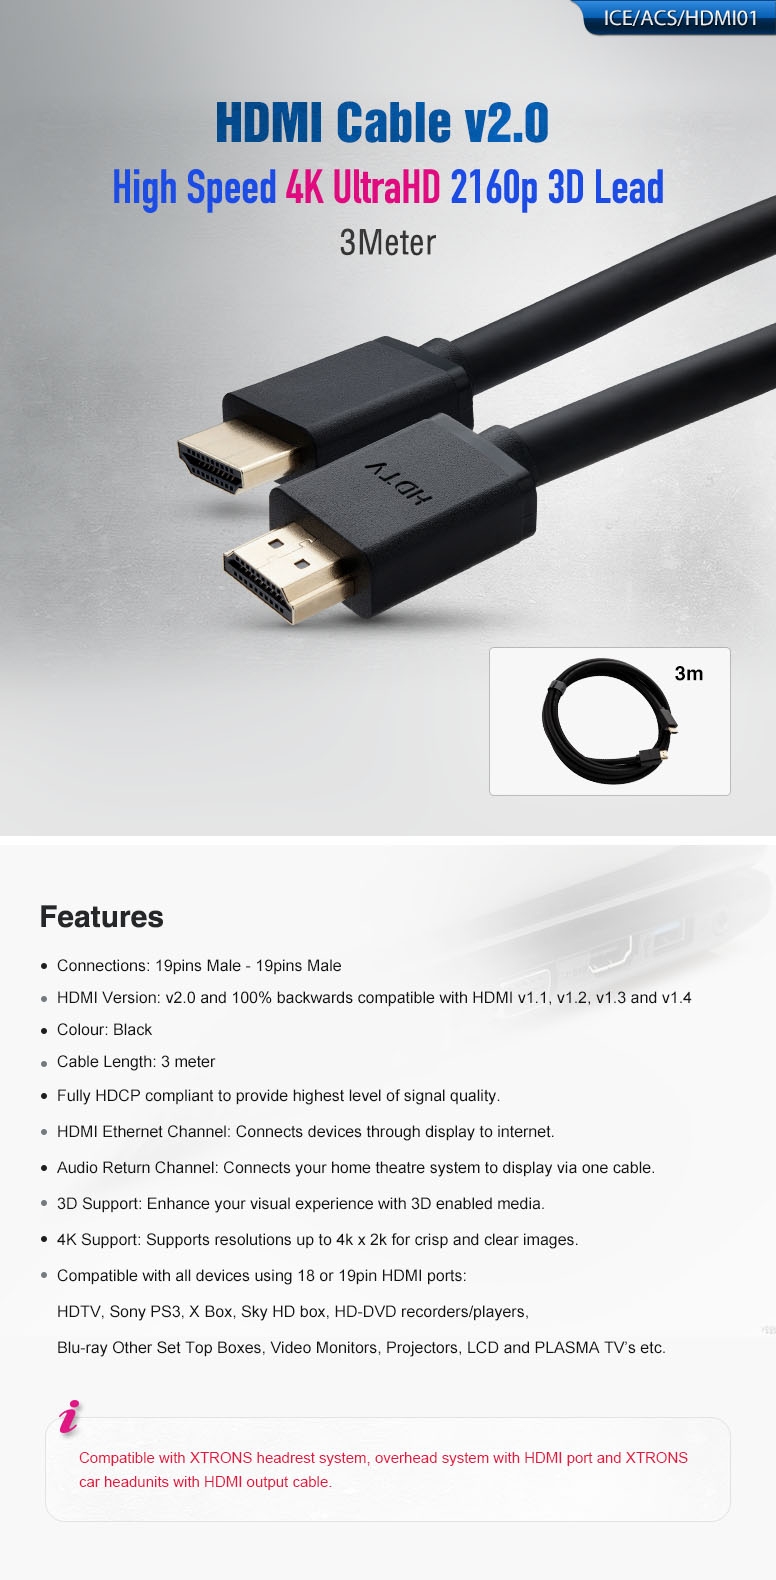 3m High Speed 4K UltraHD 2160p 3D Lead HDMI Cable V2.0